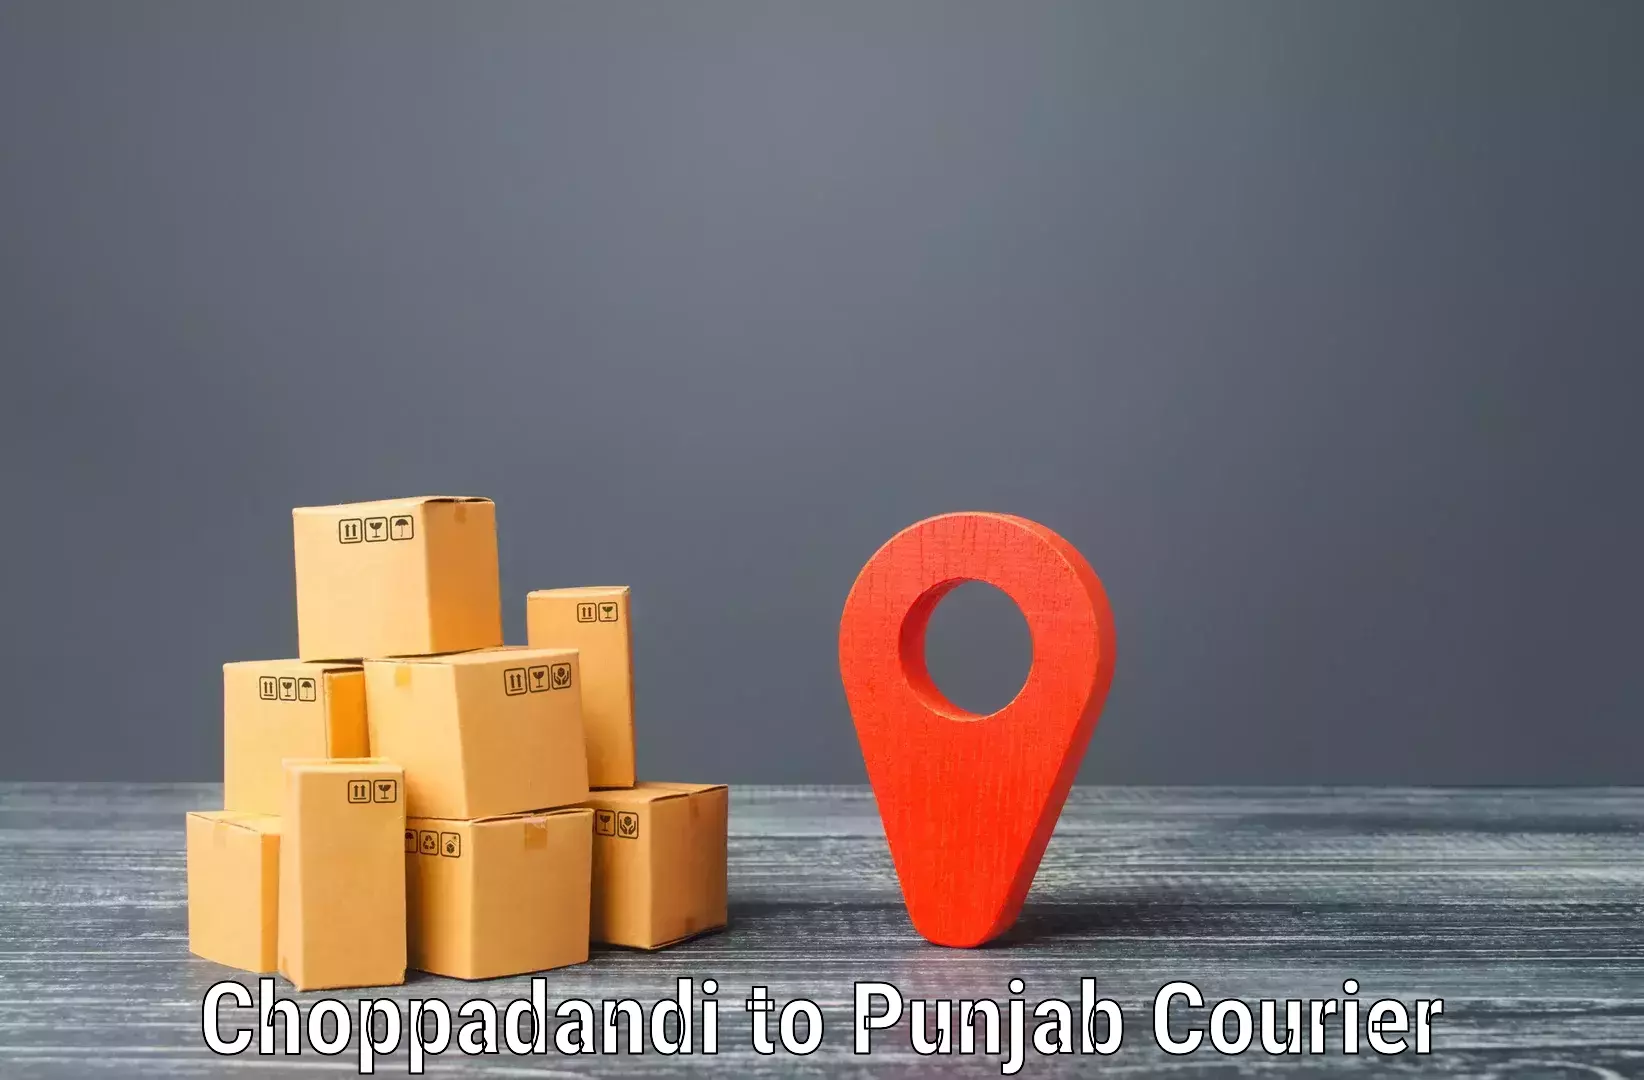 Logistics efficiency Choppadandi to Punjab